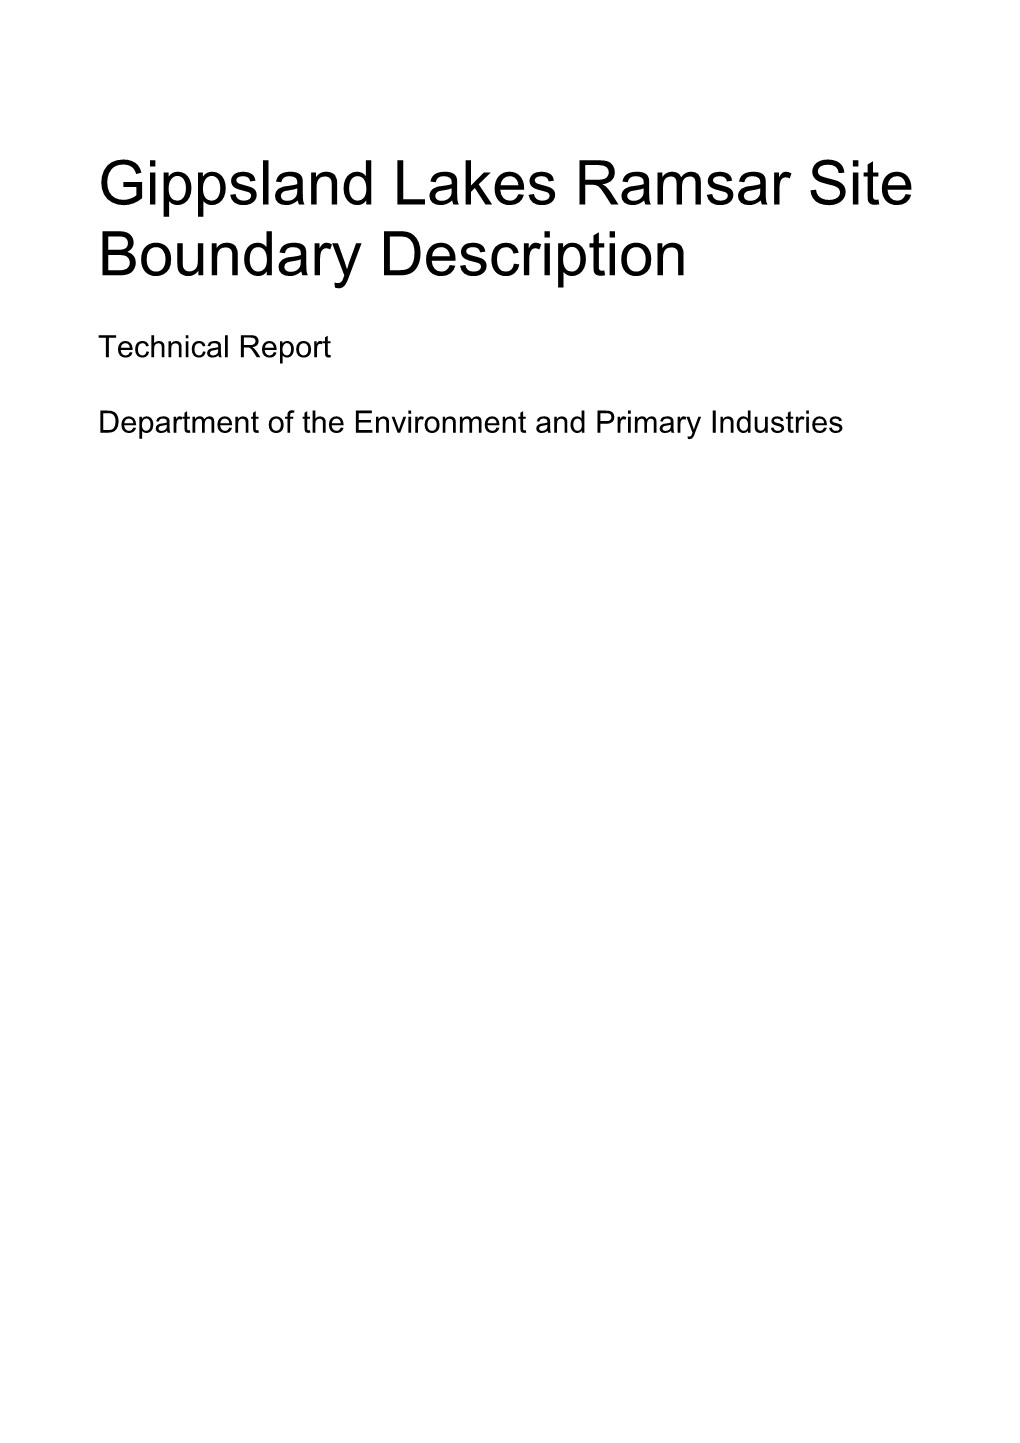 Written Description of the Gippsland Lakes Ramsar Site Boundary